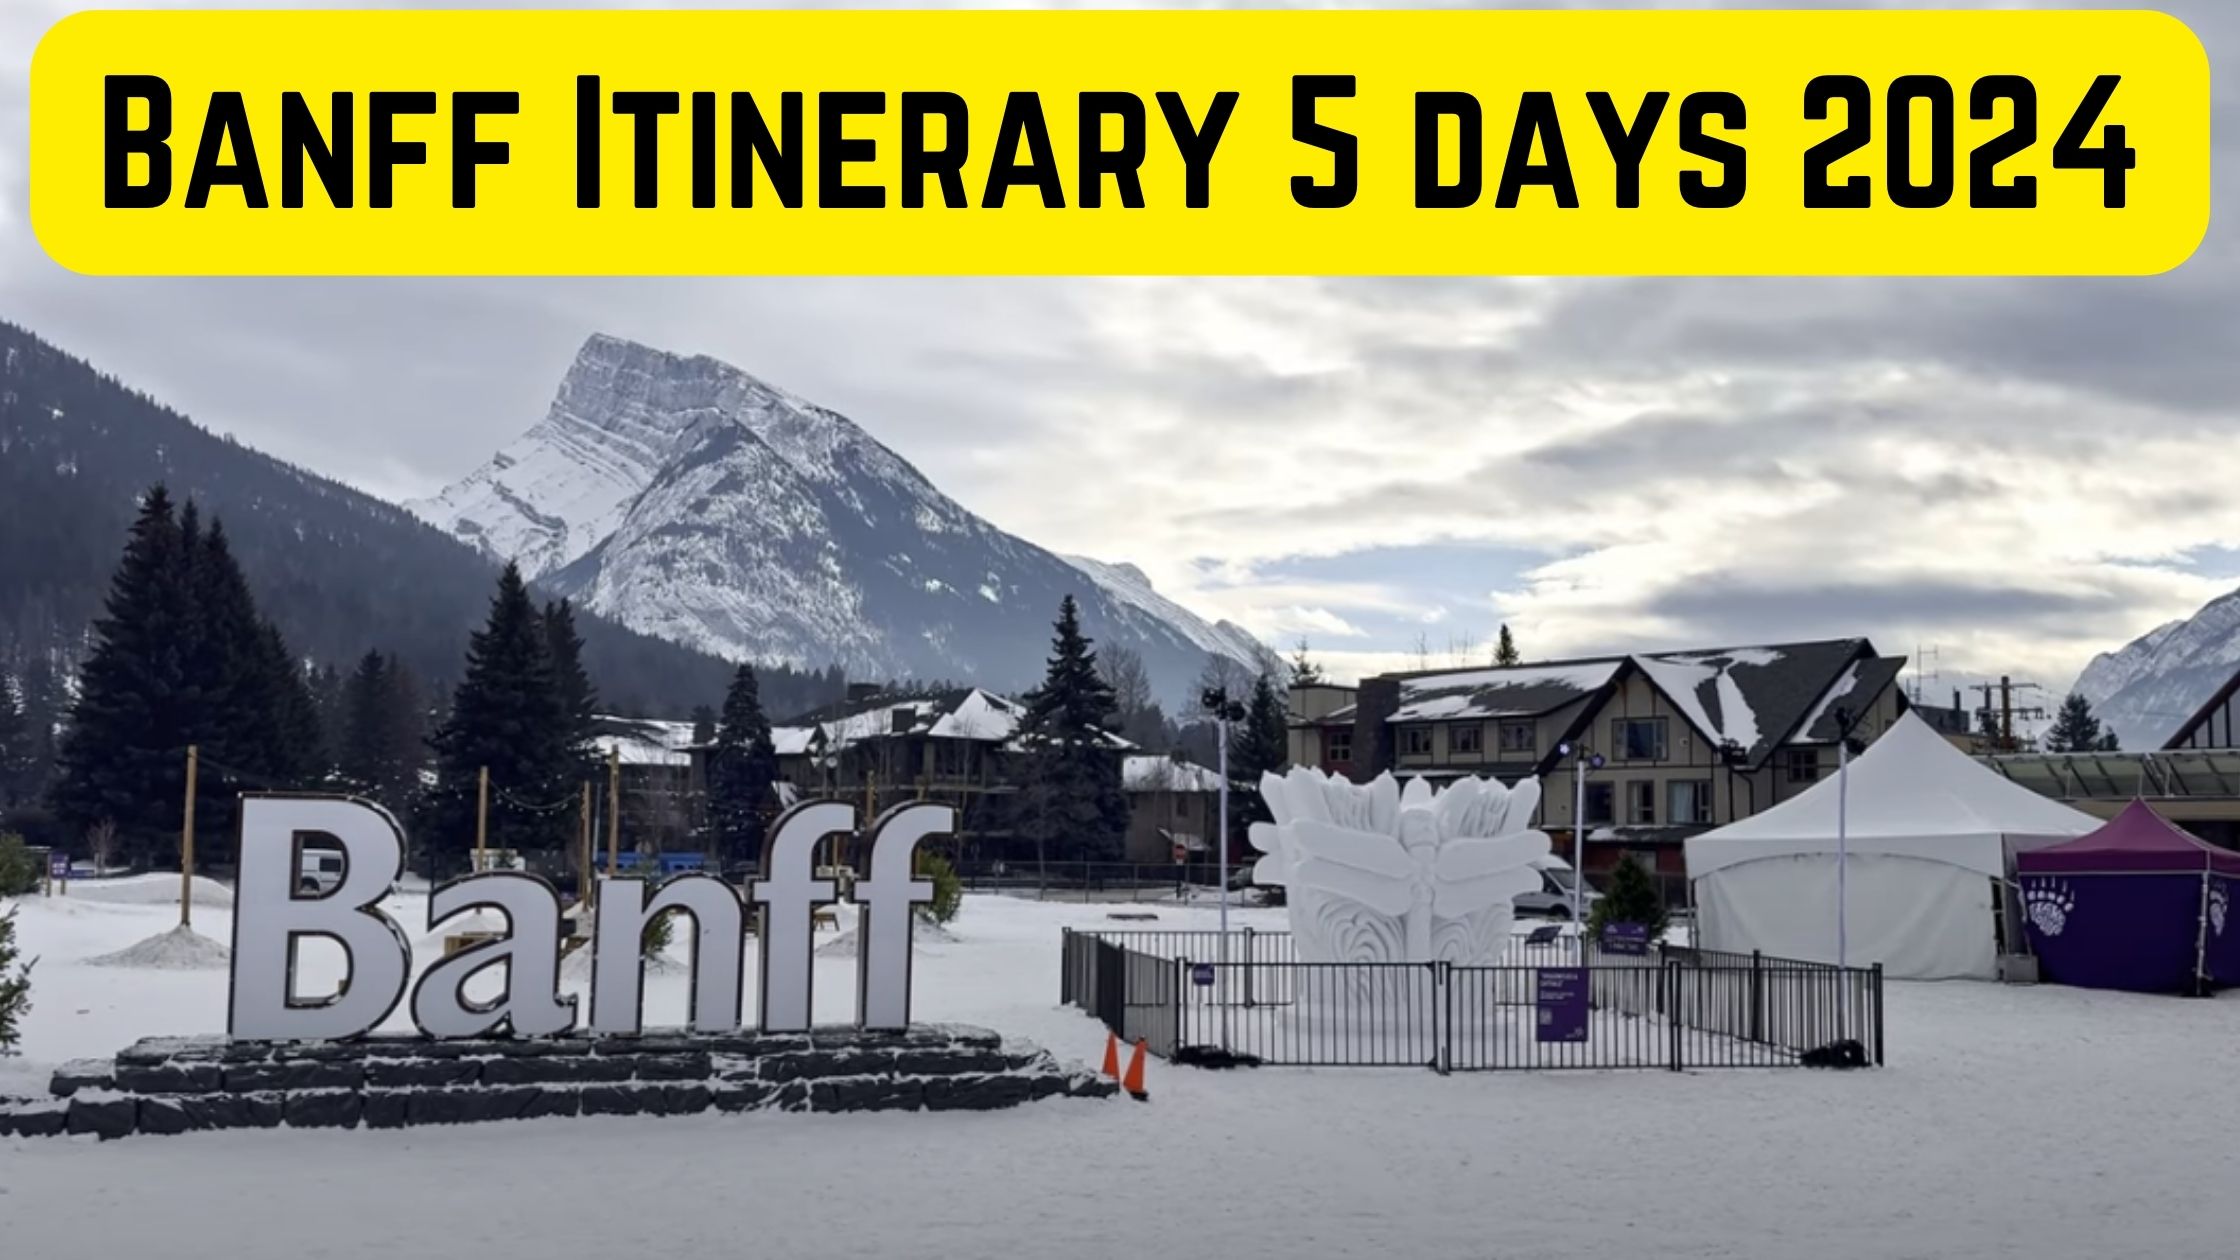 Banff Itinerary 5 days